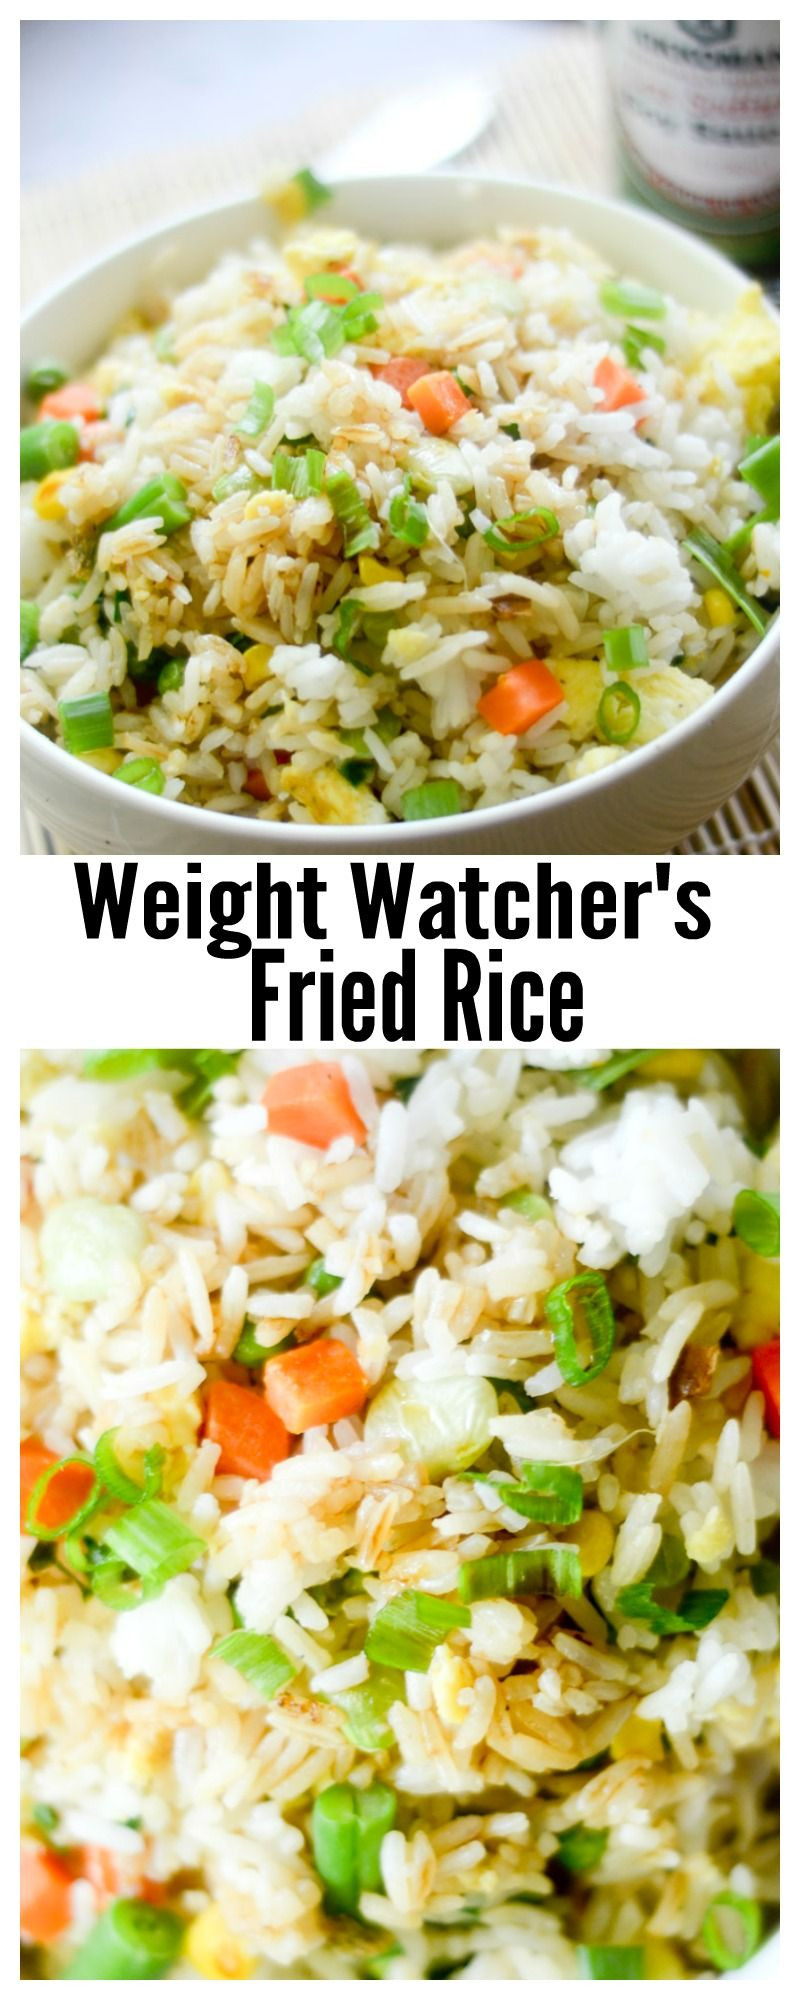 Brown Rice Weight Watchers Points
 Weight Watcher s Fried Rice Recipe